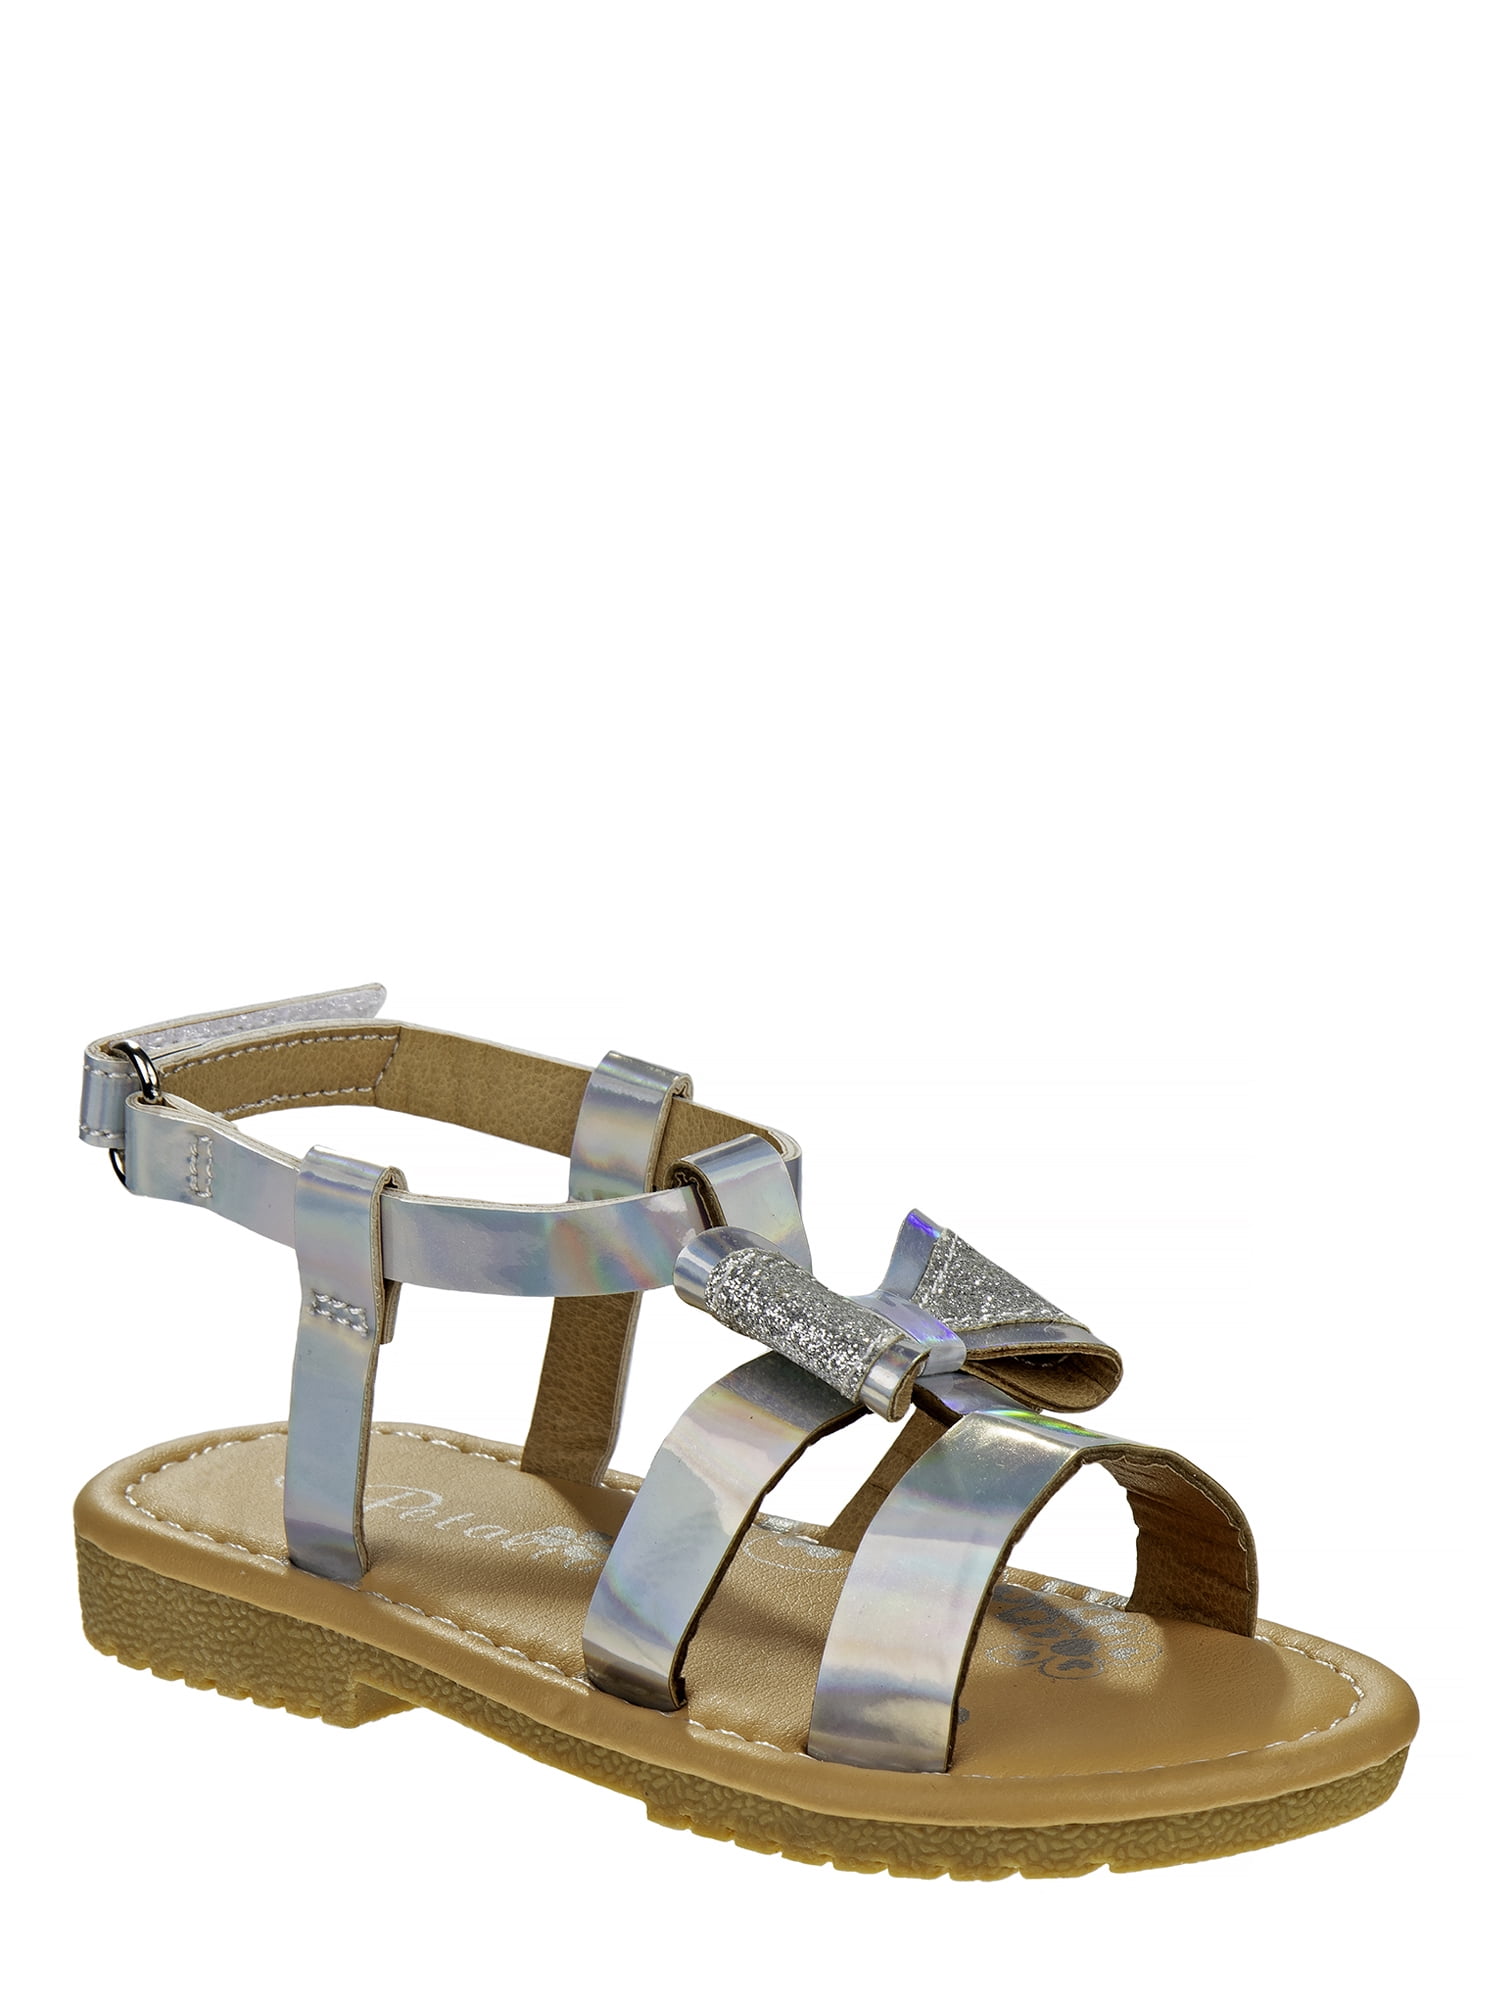 Petalia Strappy Buckled Bow Sandals (Toddler Girls) - Walmart.com